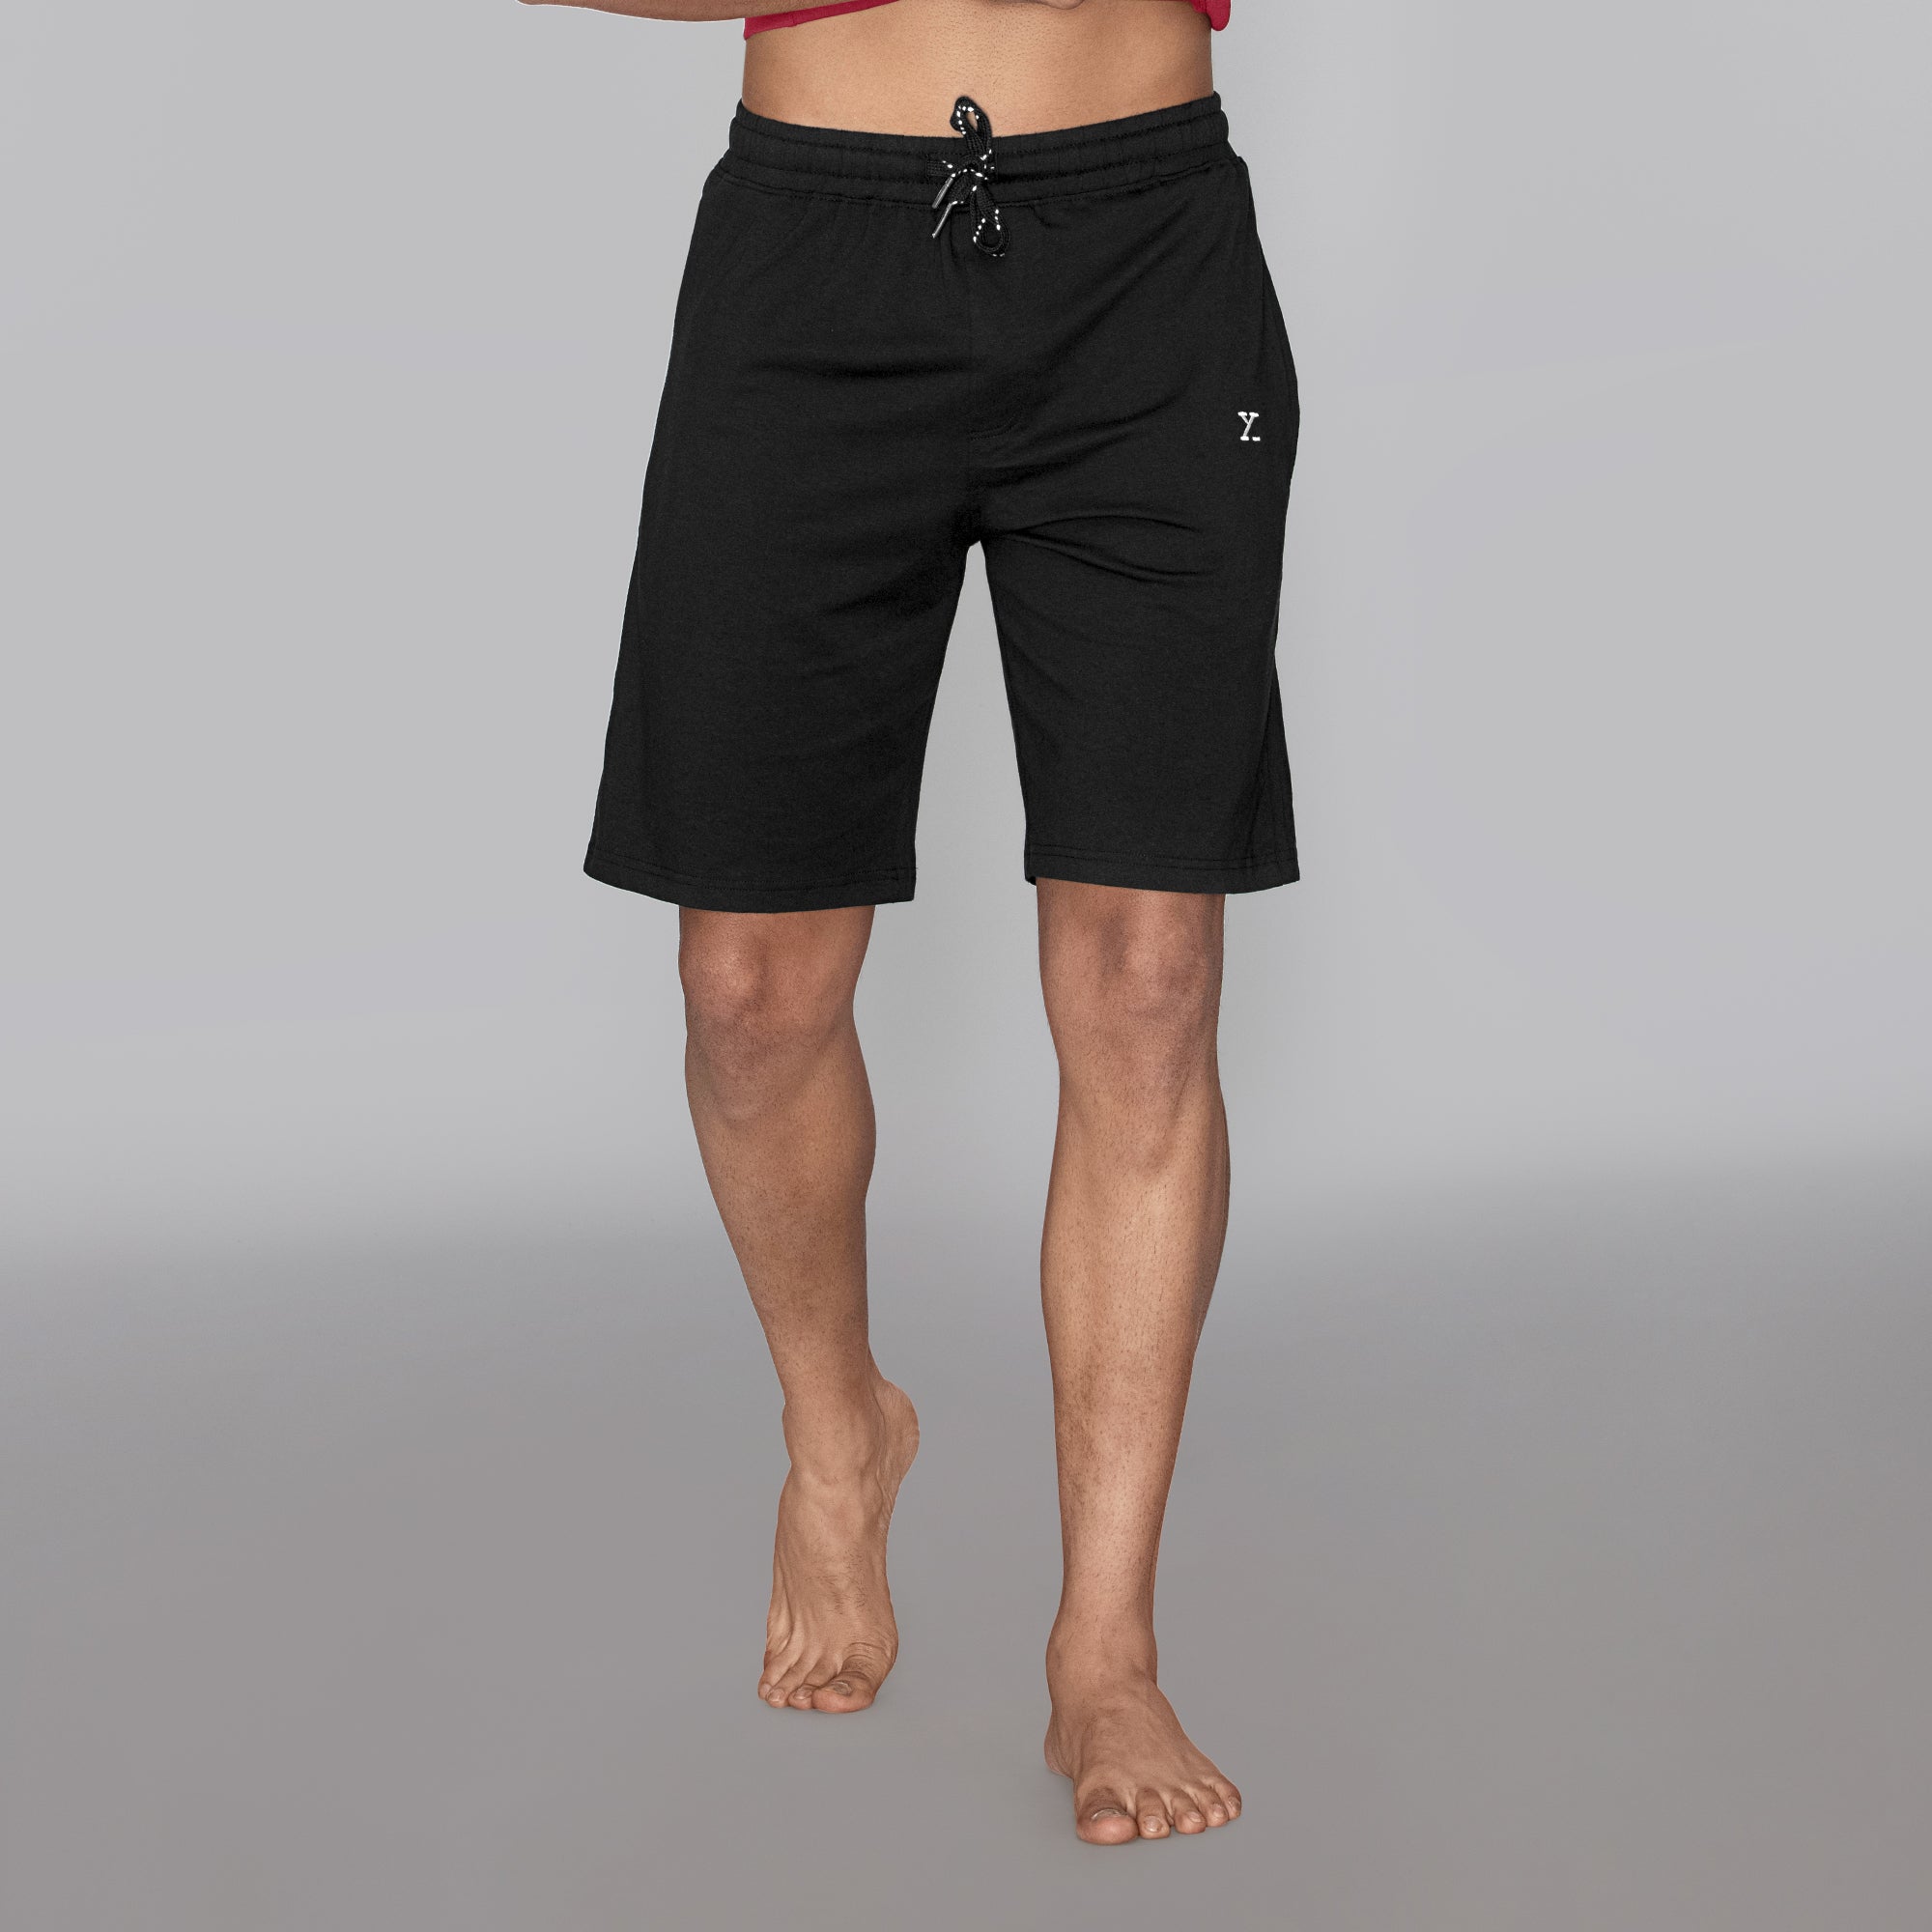 Ace Modal-Cotton Shorts For Men Pitch Black - XYXX Mens Apparels